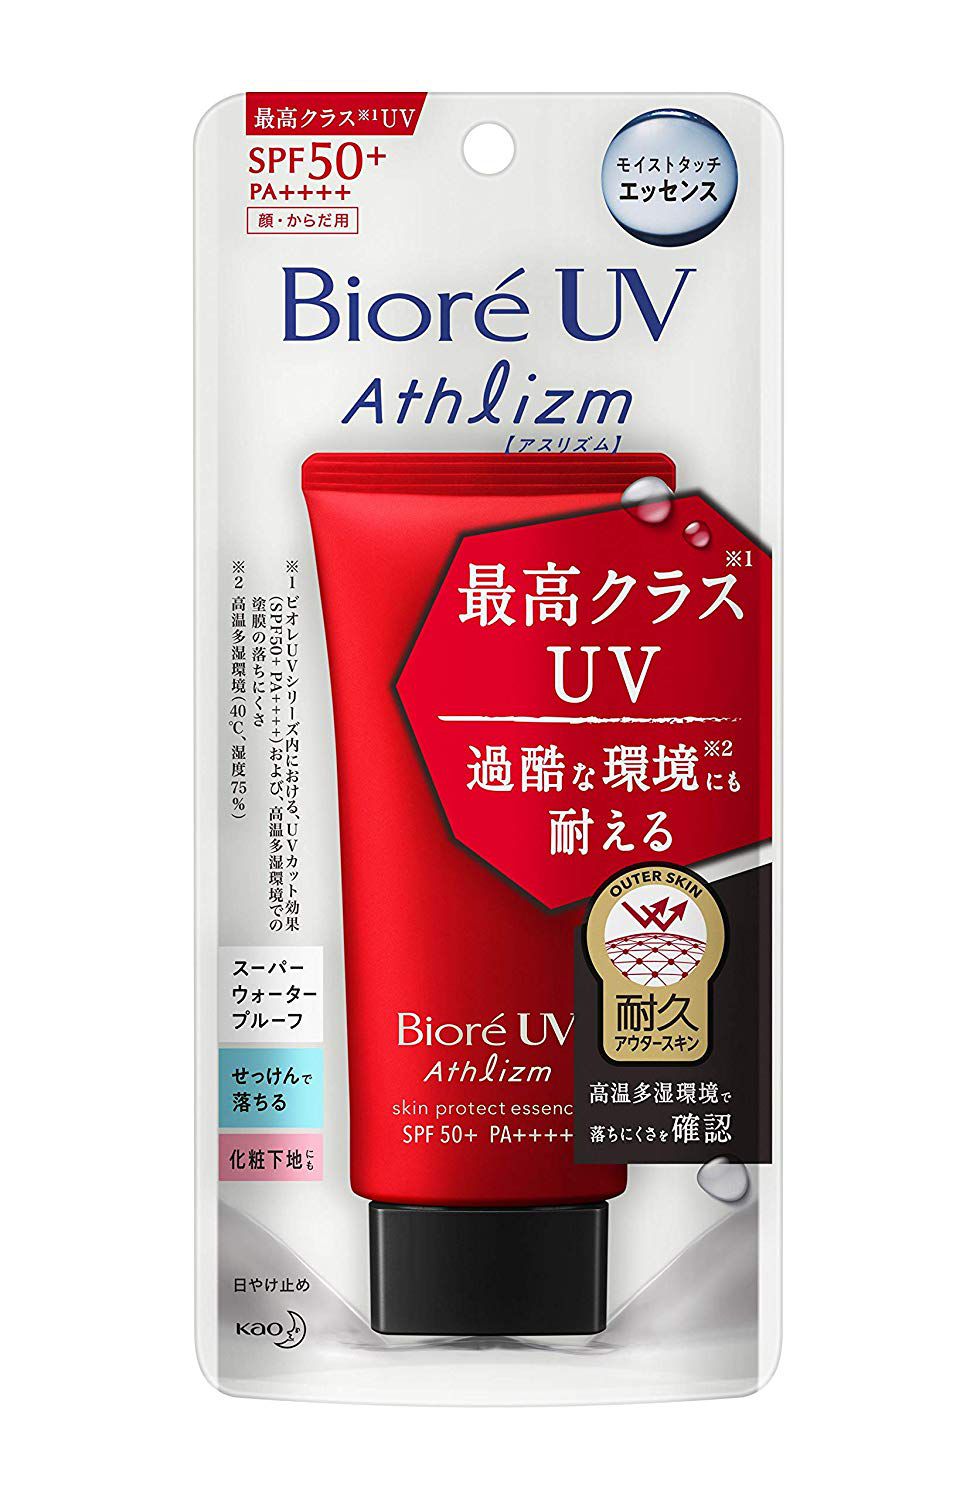 NEW Bioré UV Athlizm Skin Protect Essence SPF50+ PA++++ 70g